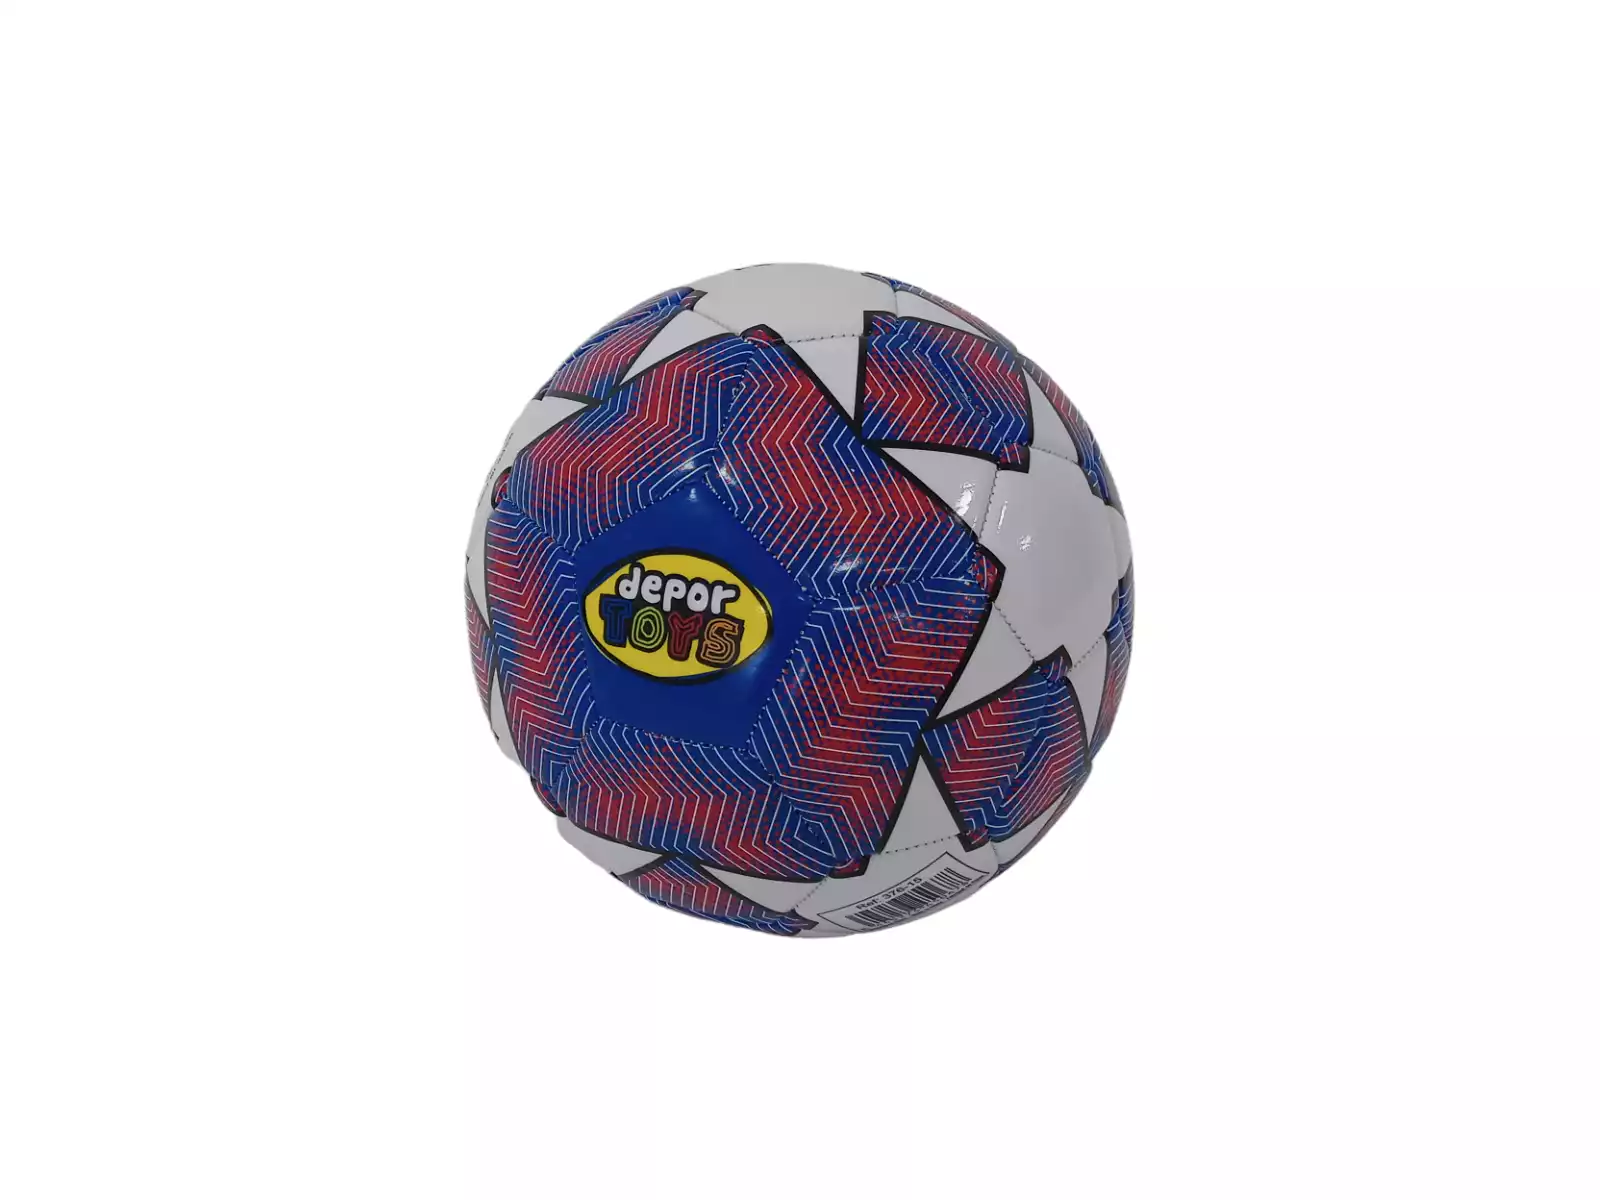 Real Madrid Mini Balón 14 cm. Smoby 50925 - Juguetilandia